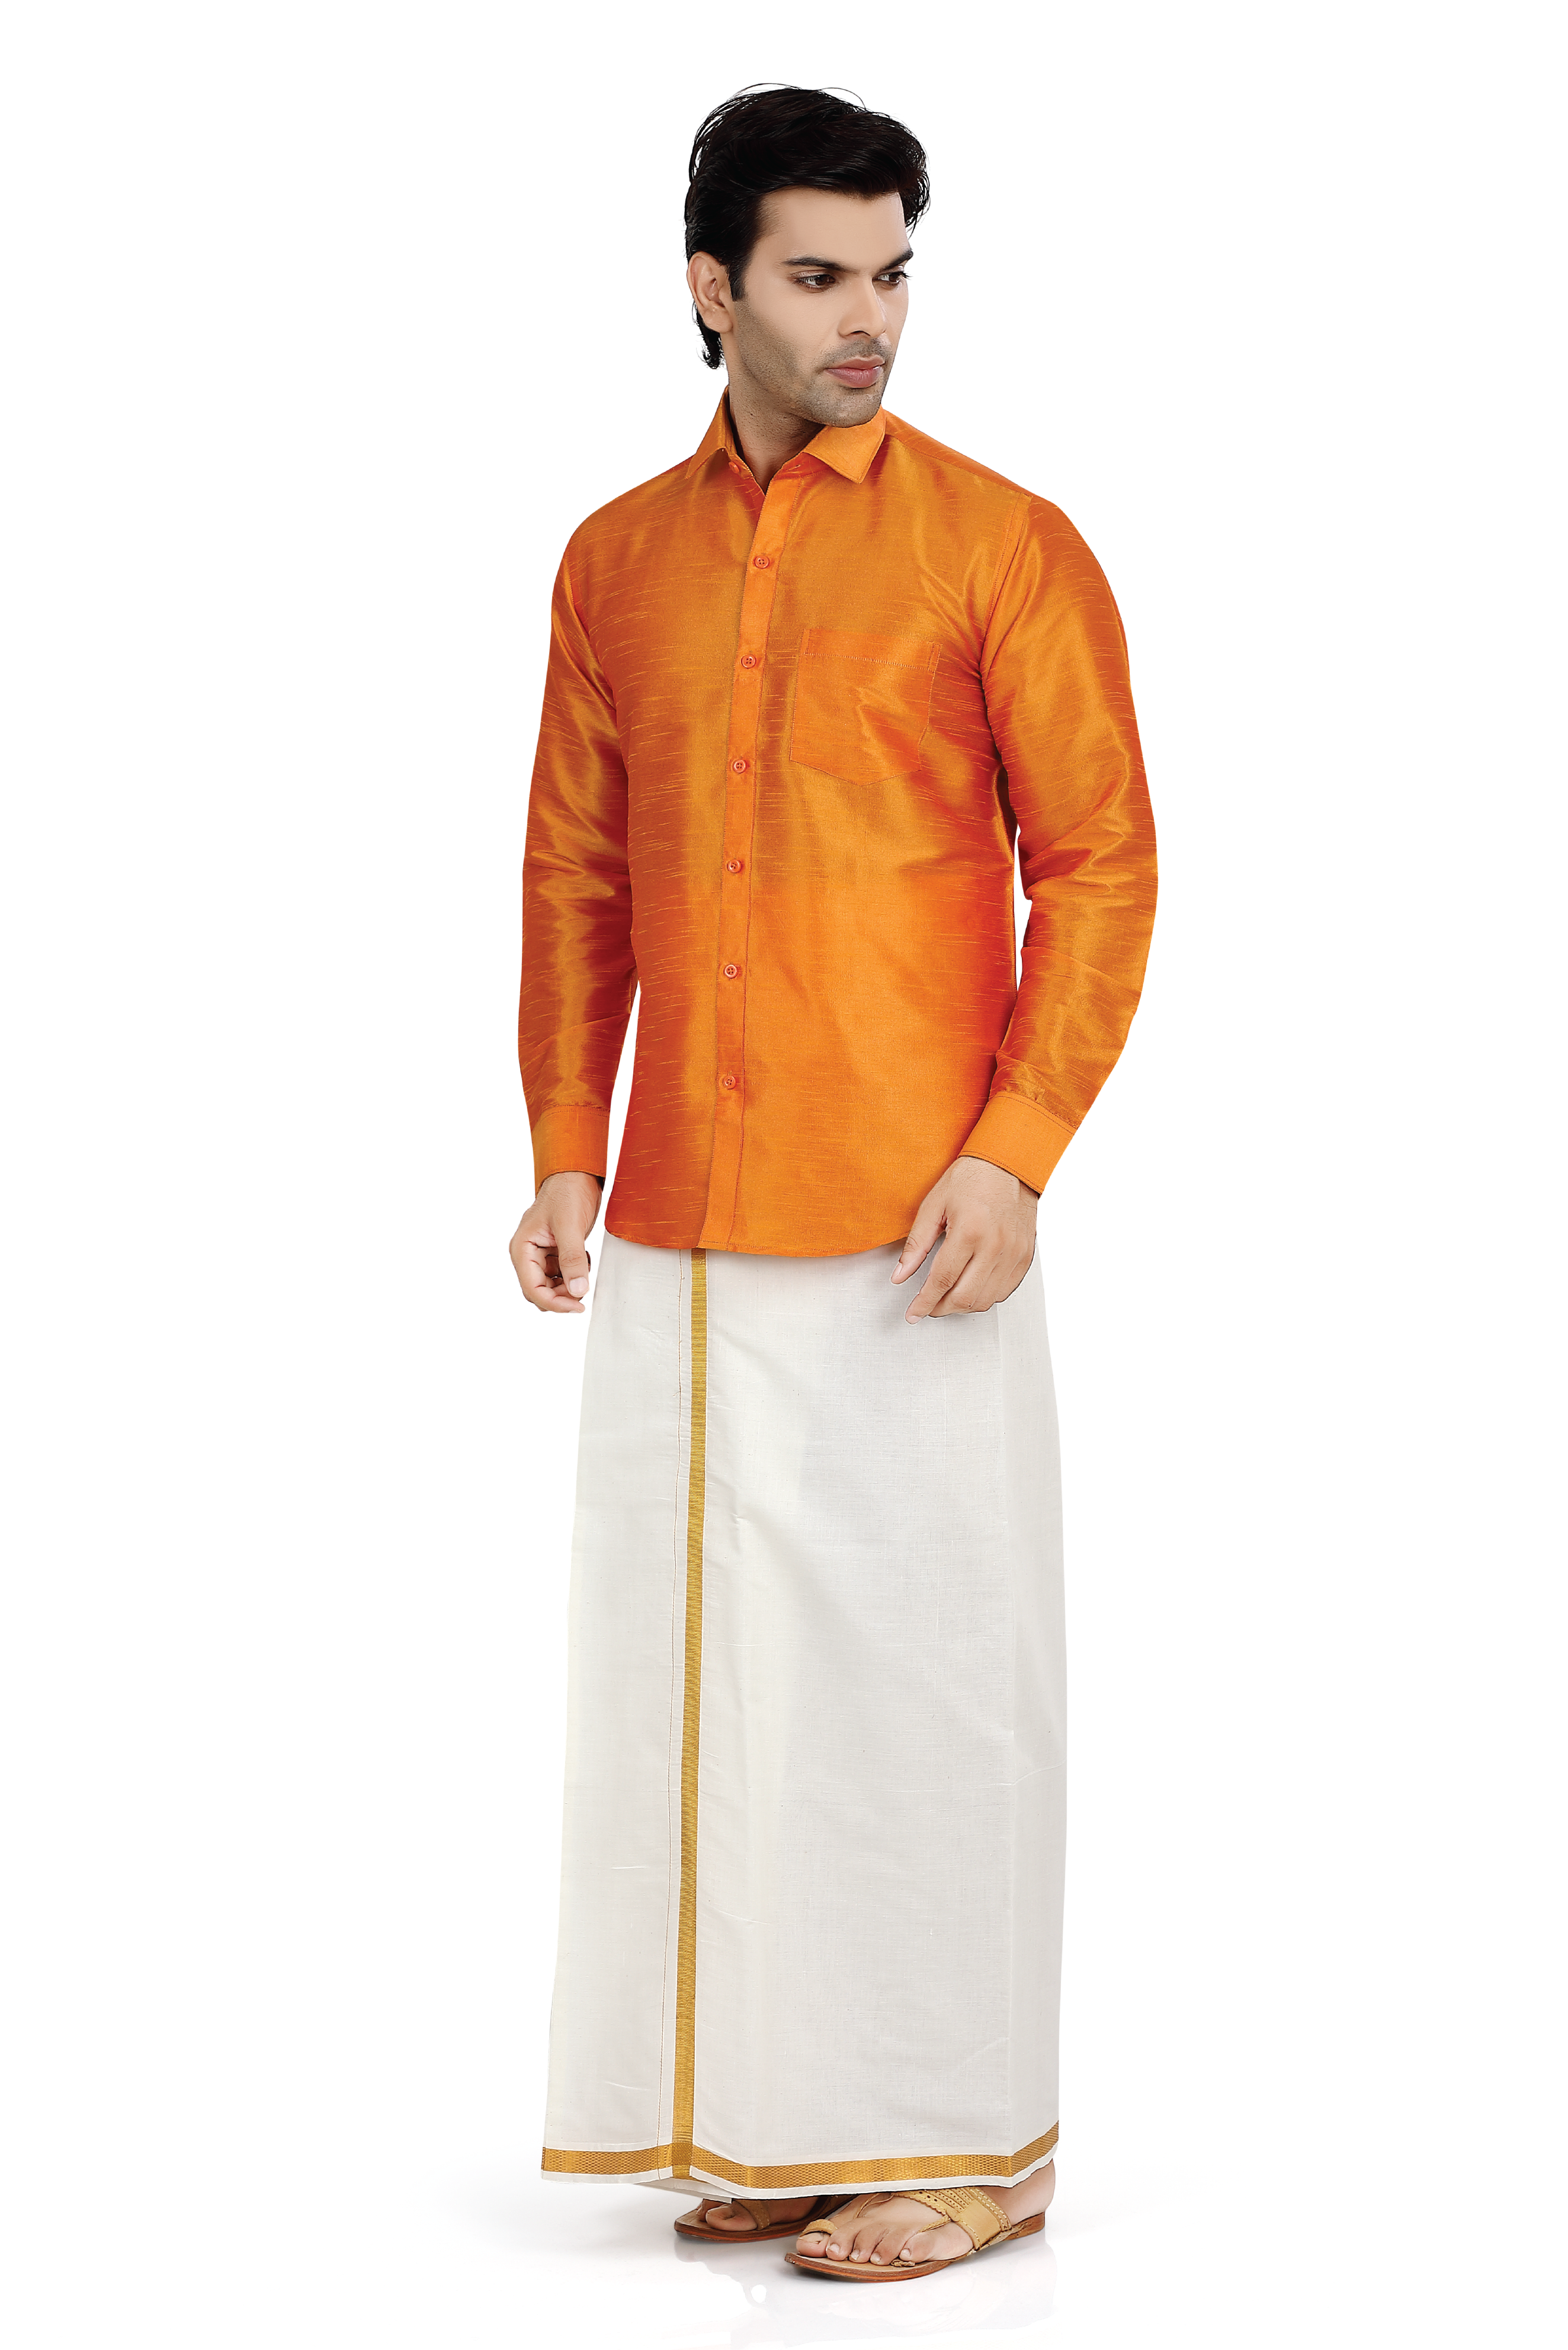 Dupion Silk Shirt in Orange Full sleeves with Dhoti